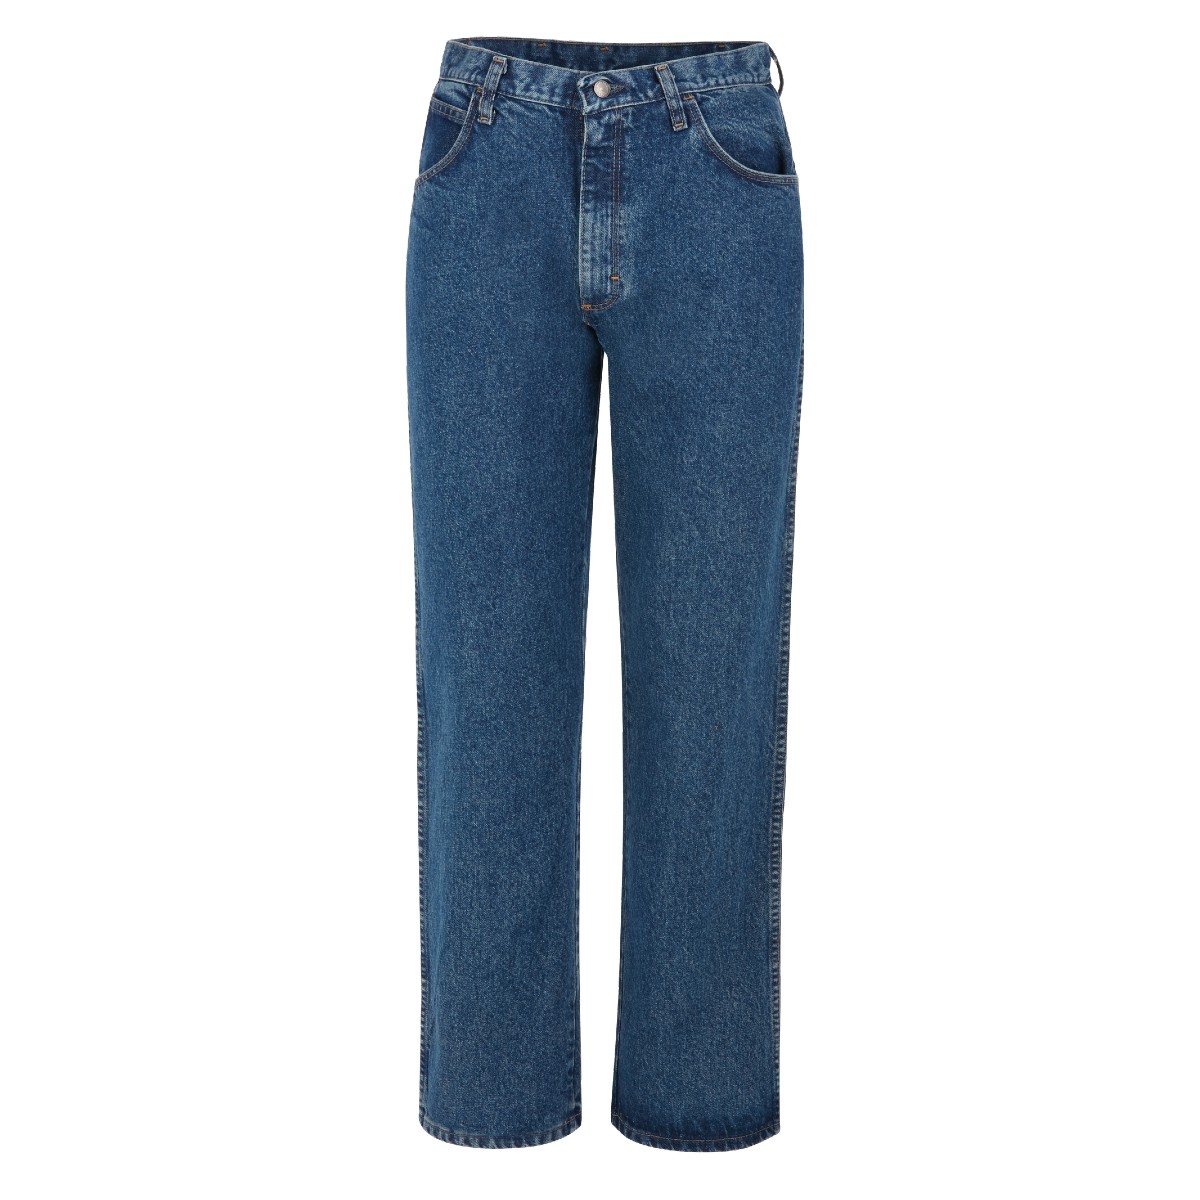 Bulwark Stonewashed Loose-Fit FR Jeans in Denim